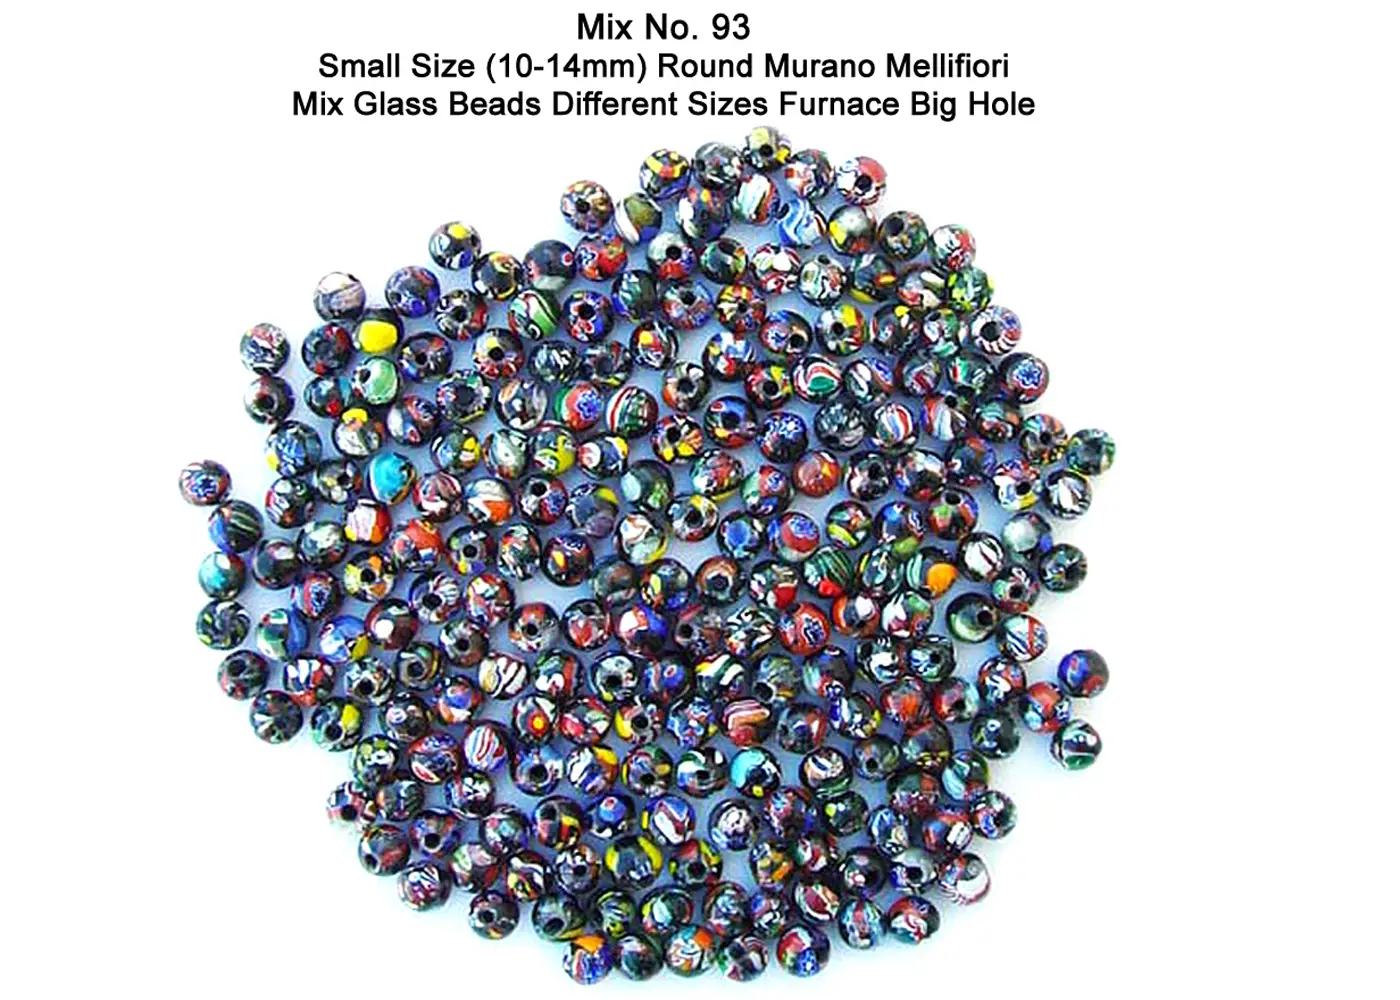 Small Size (10-14 mm) Round Murano Mellifiori Mix glass beads different size farnace big hole